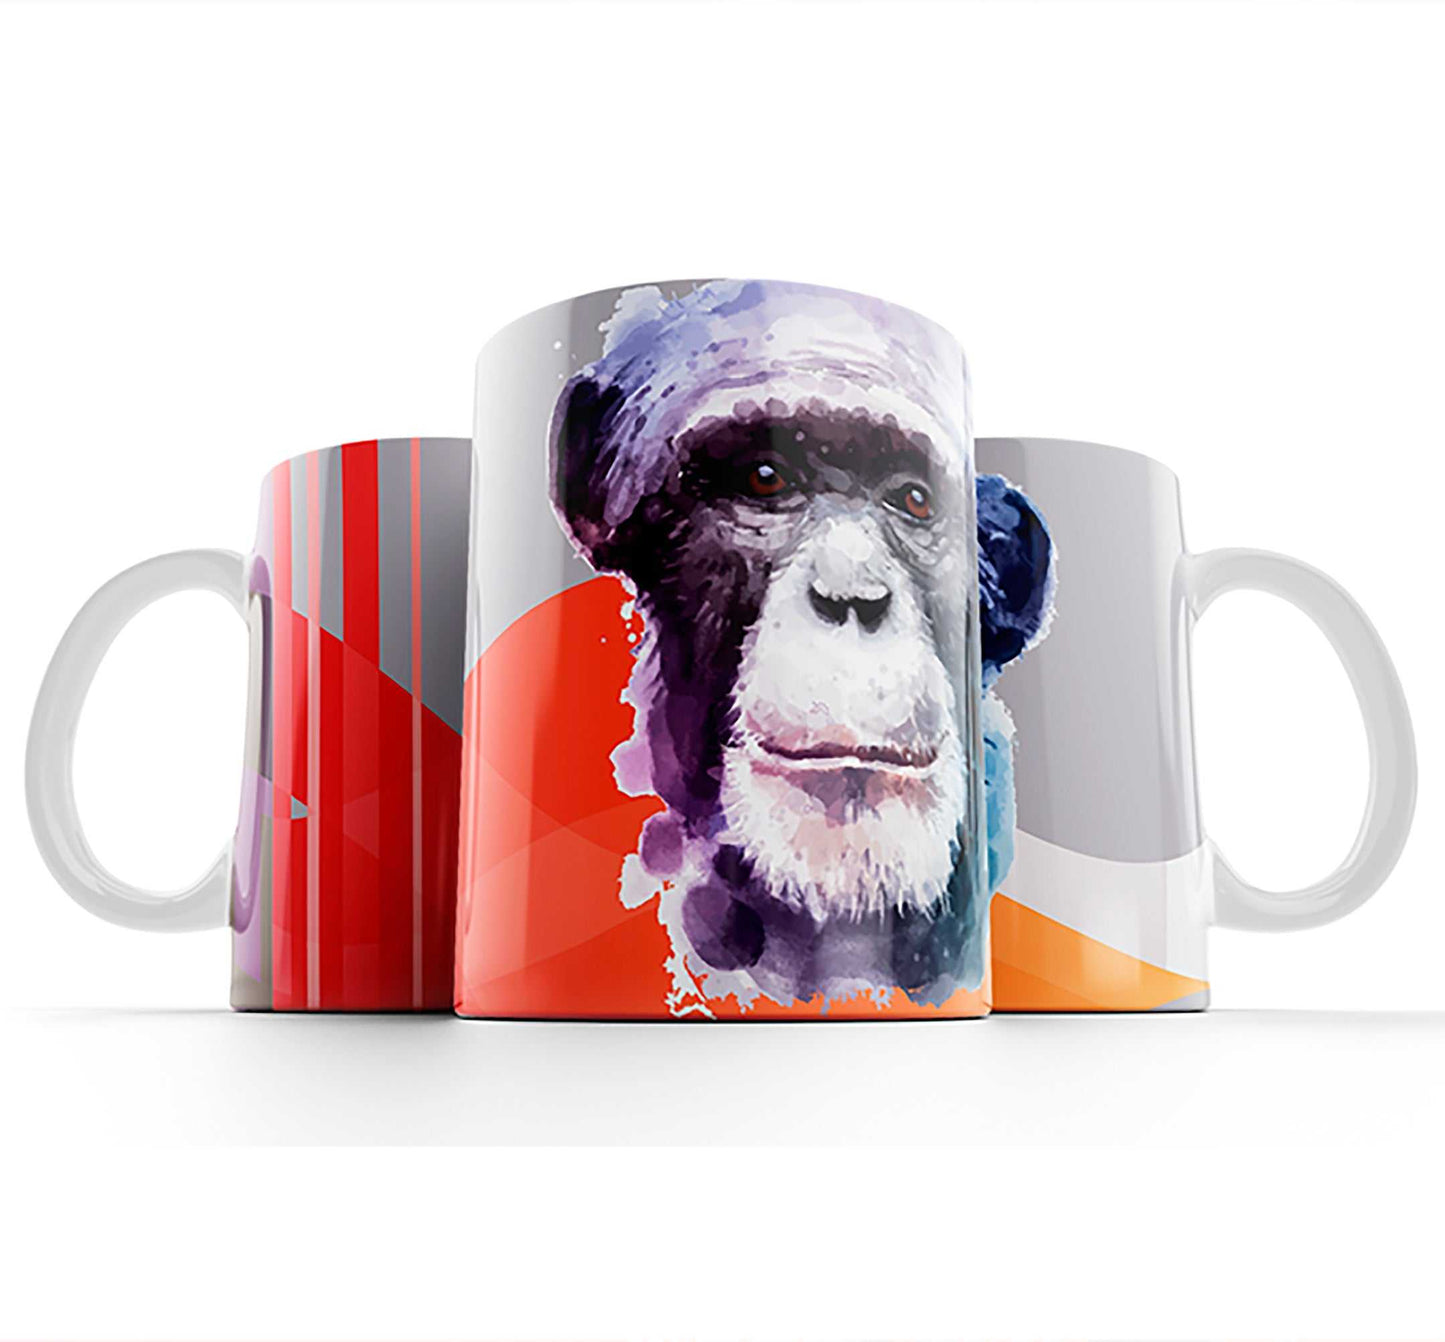  Chimpanzee Monkey Coffee or Tea Mug by Free Spirit Accessories sold by Free Spirit Accessories